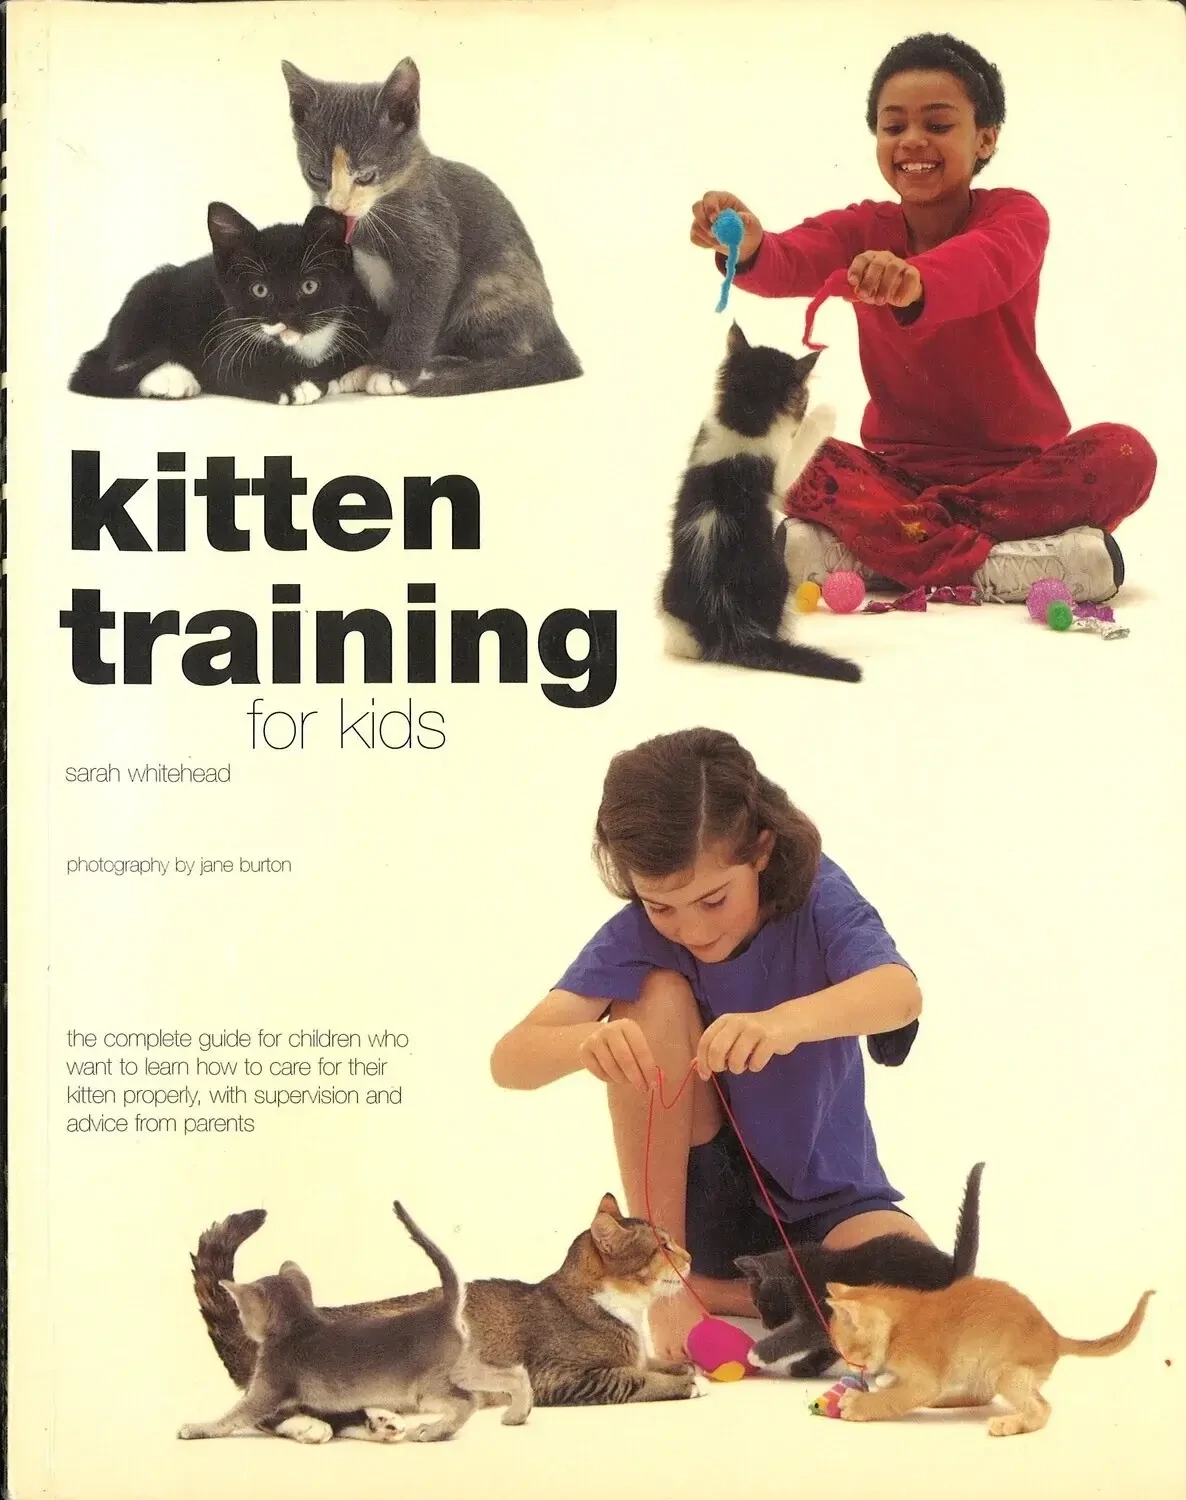 Kitten Training for Kids by Sarah Whitehead